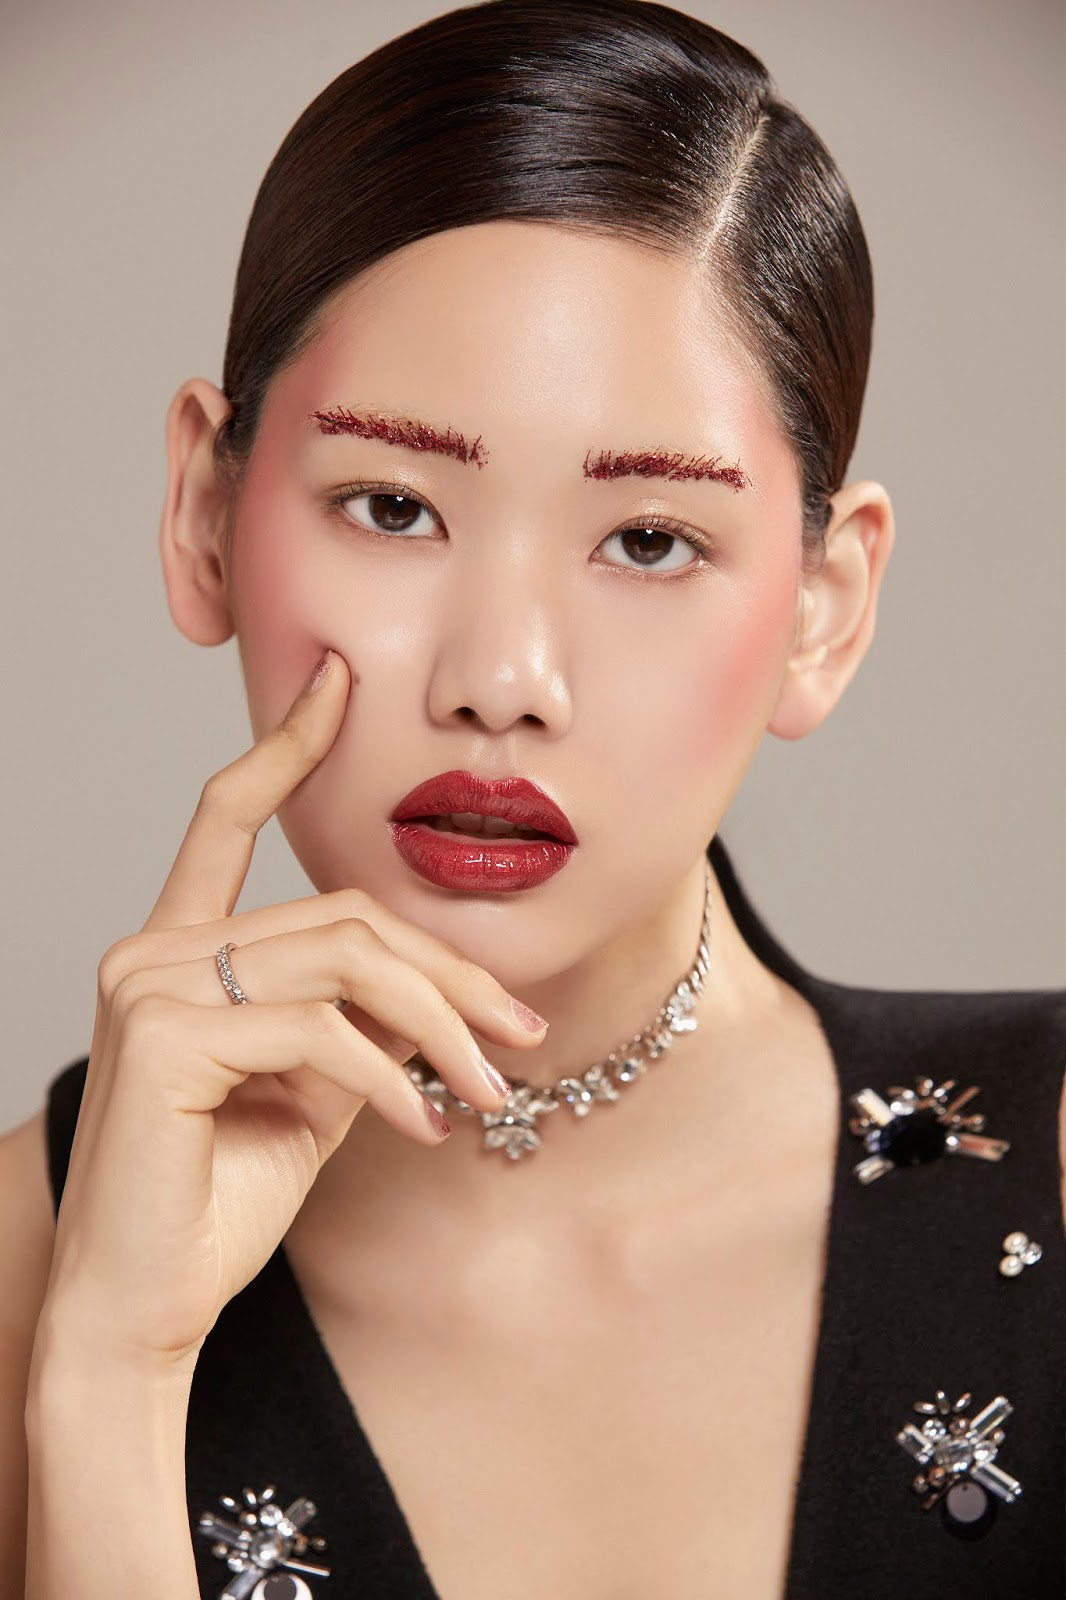 agencygarten: 2018 DECEMBER SINGLES MODEL. YOON SEON-YOUNG